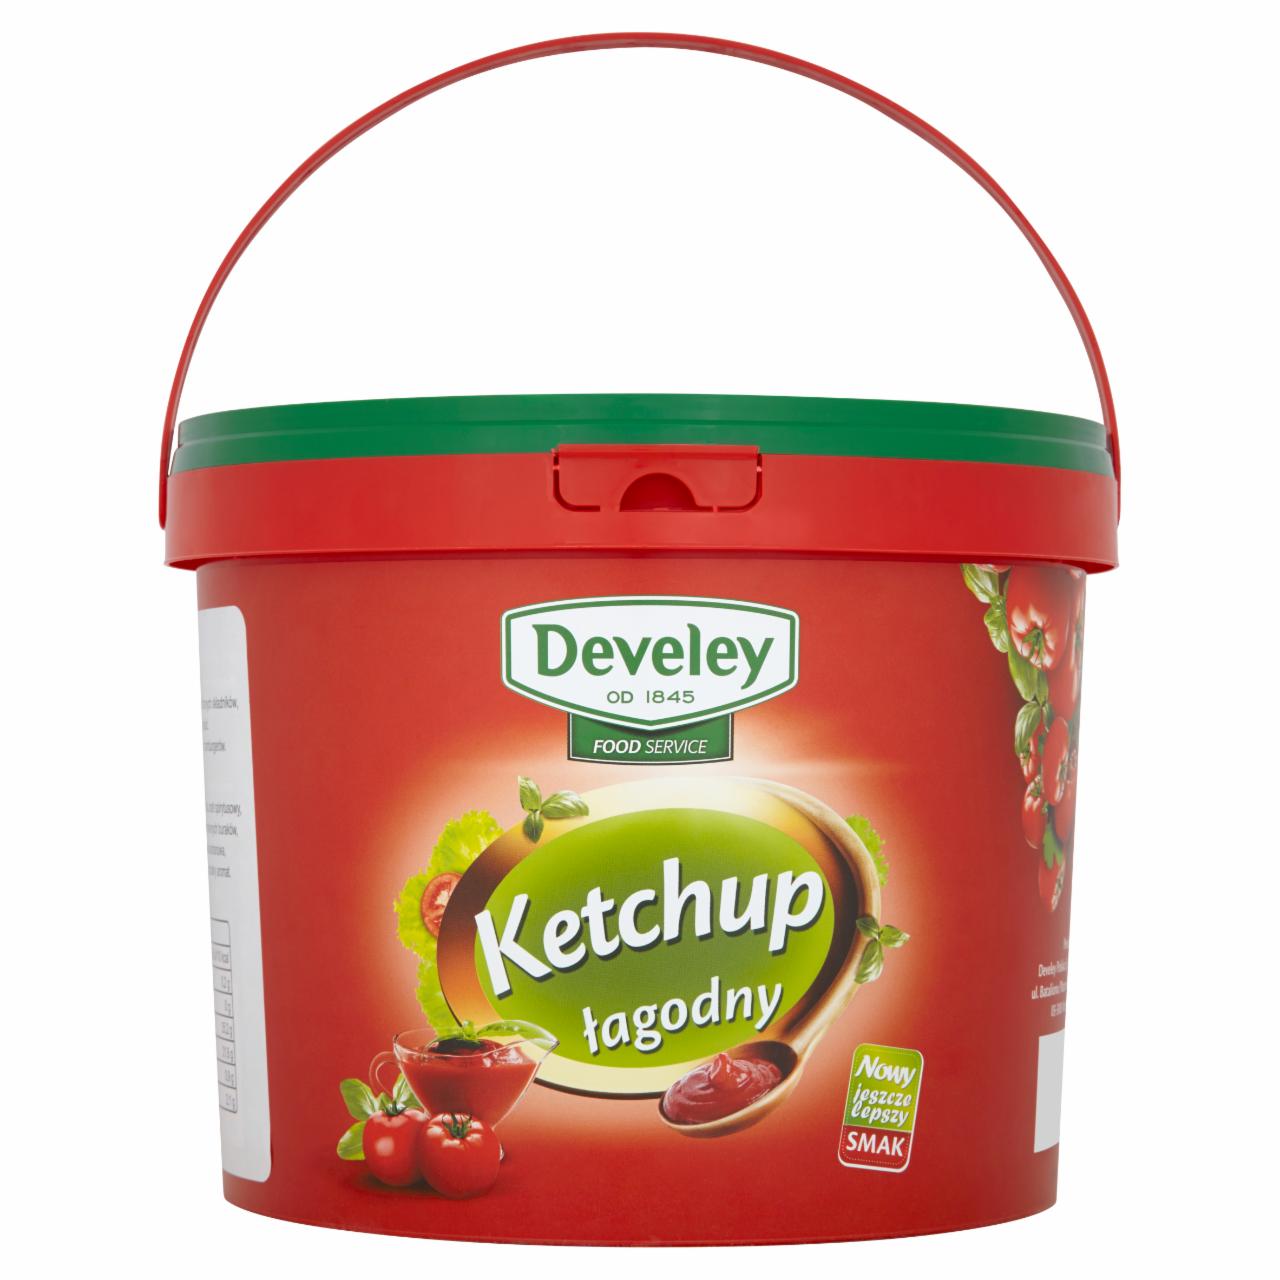 Zdjęcia - Develey Food Service Ketchup łagodny 5,5 kg